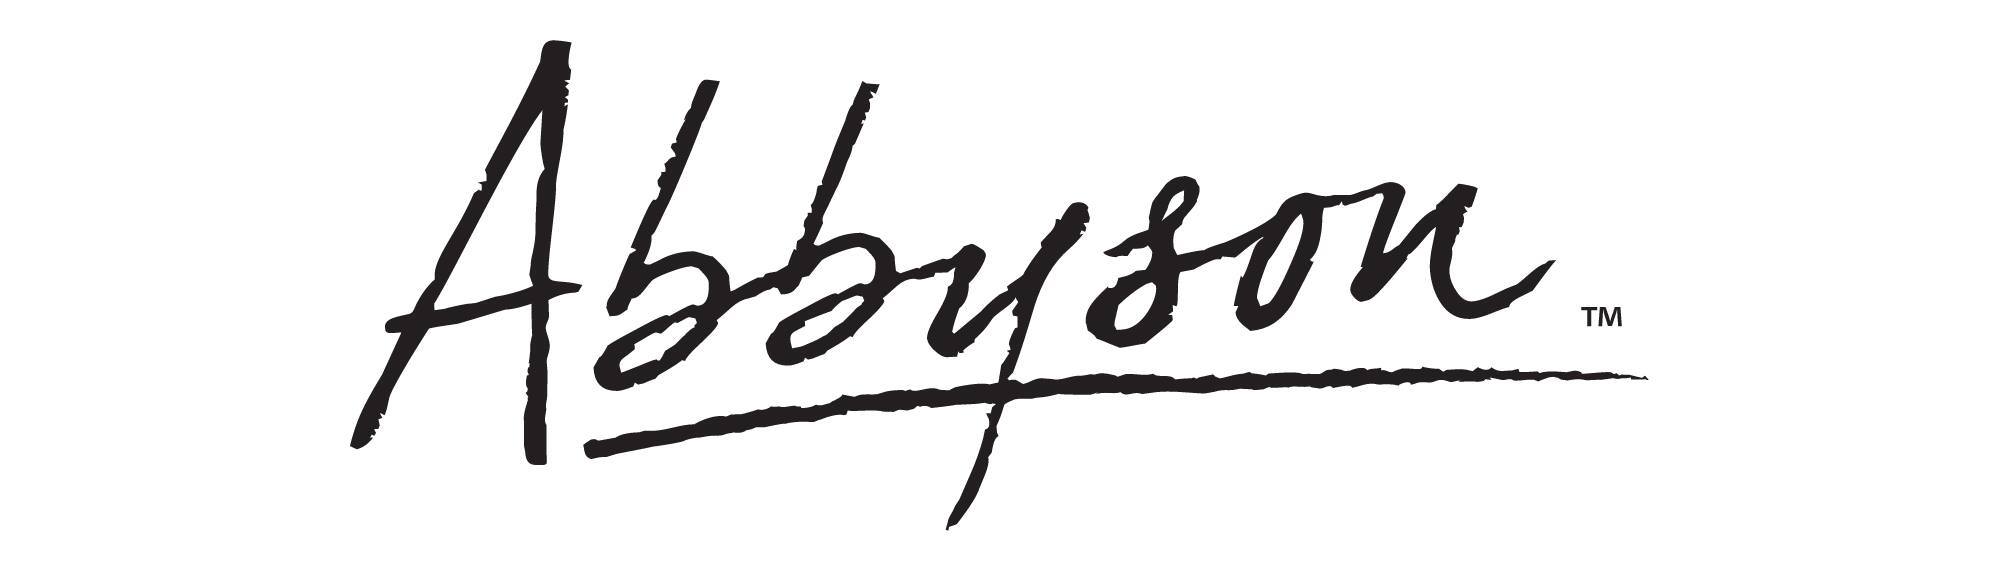 Abbyson Logo